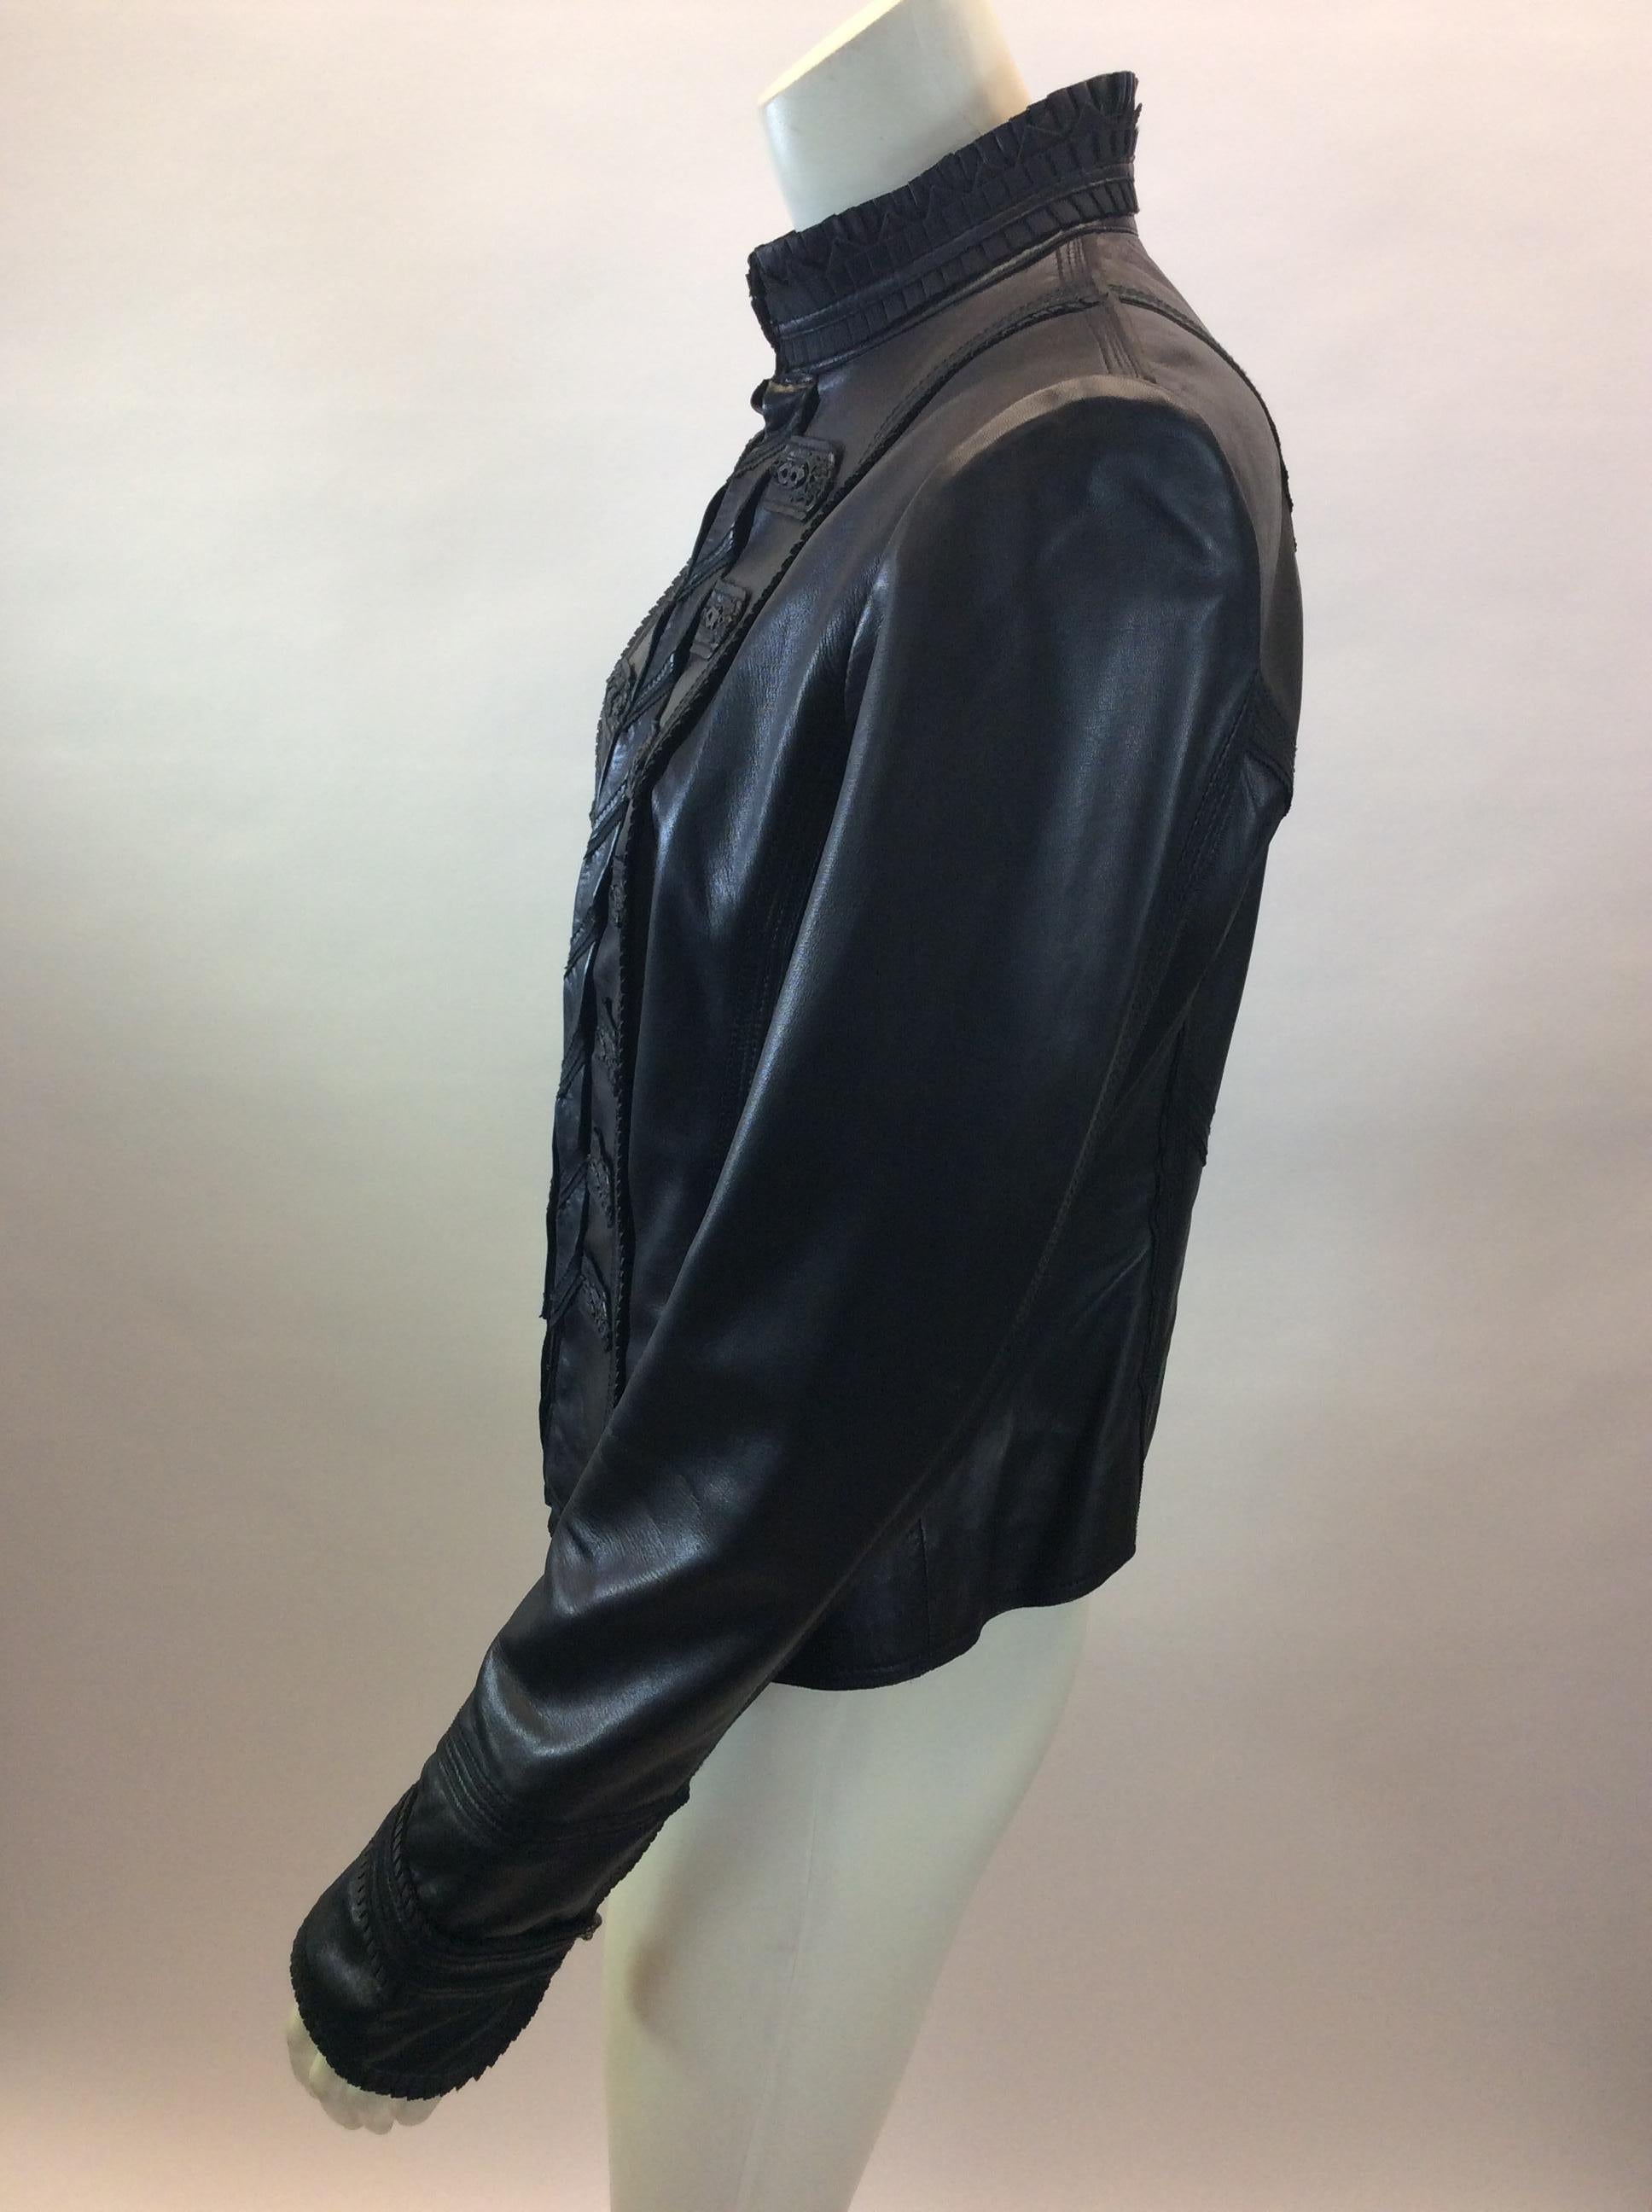 Elie Tahari Black Leather Jacket
$199
Made in China
100% Leather
Size Medium
Length 21.5